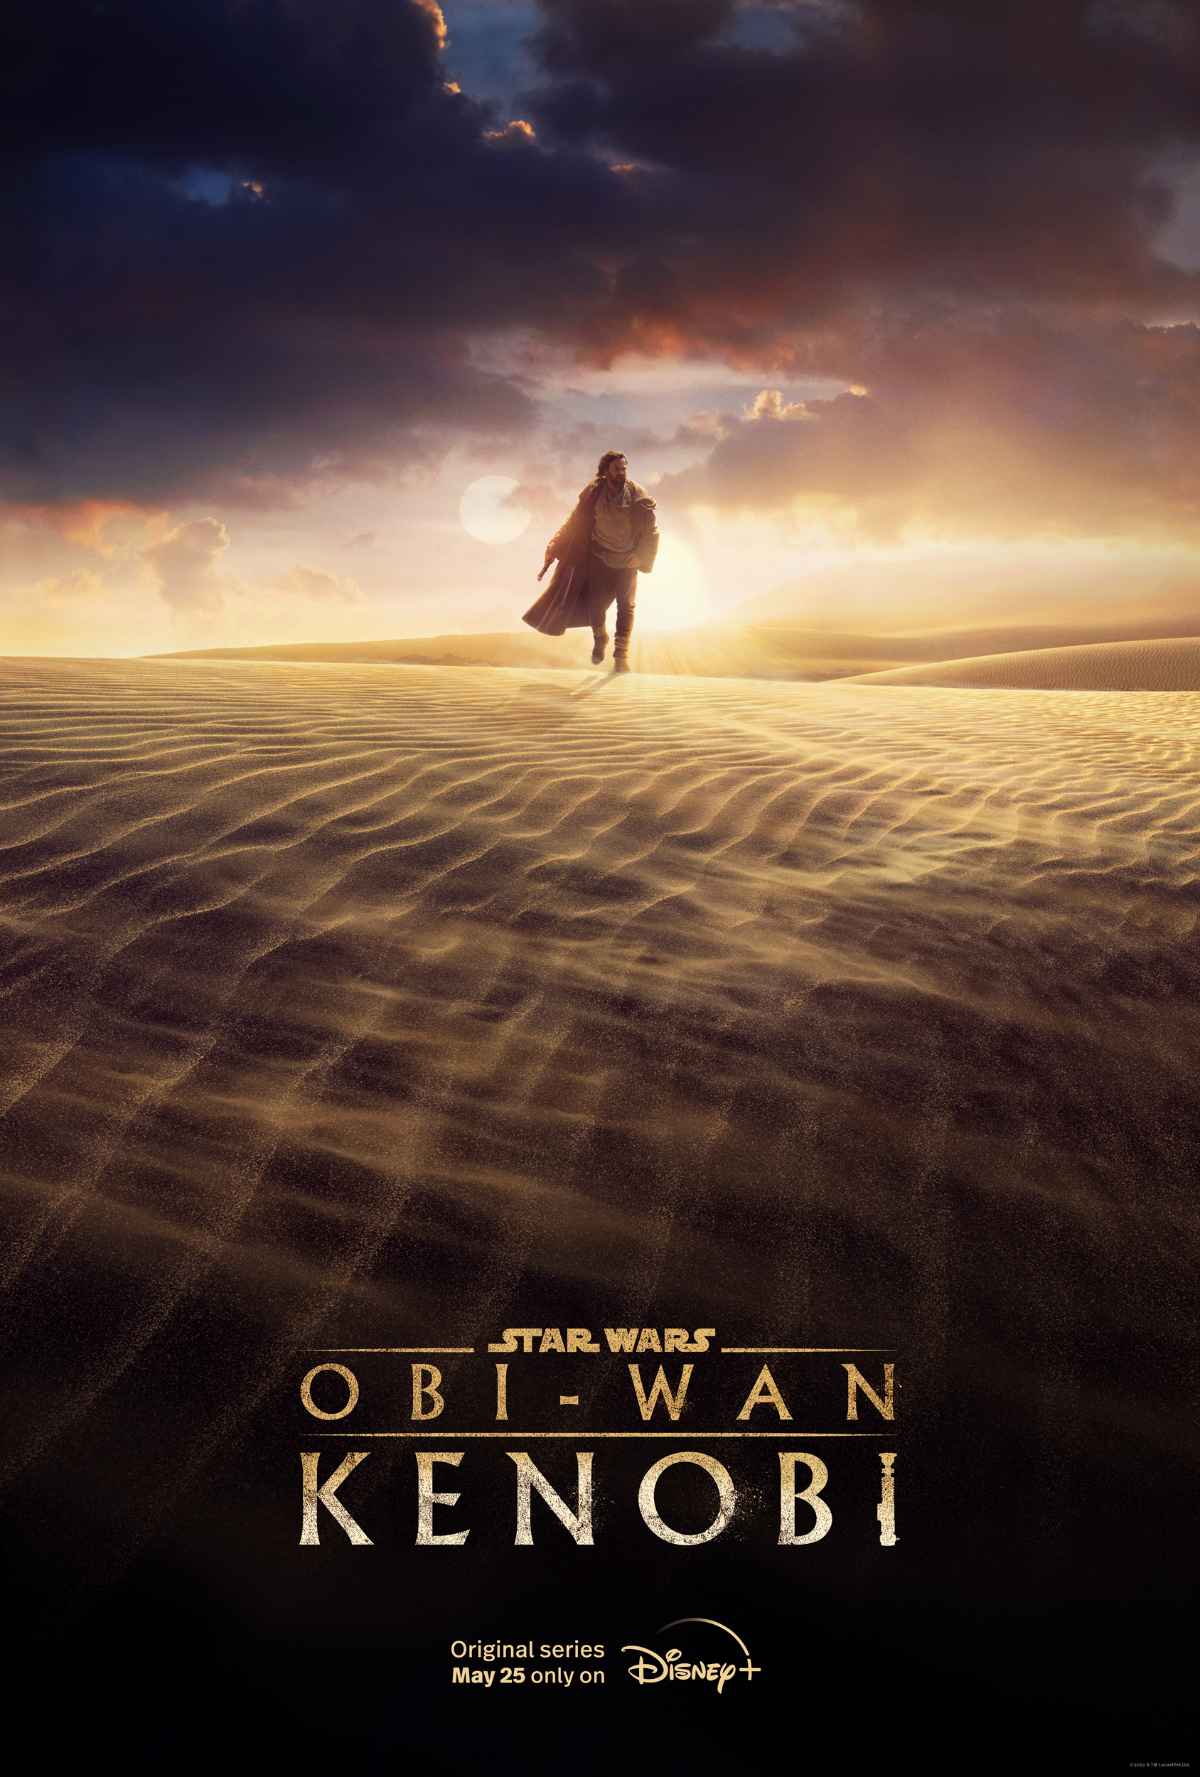 Obi-Wan Kenobi Release Date and Poster Revealed!